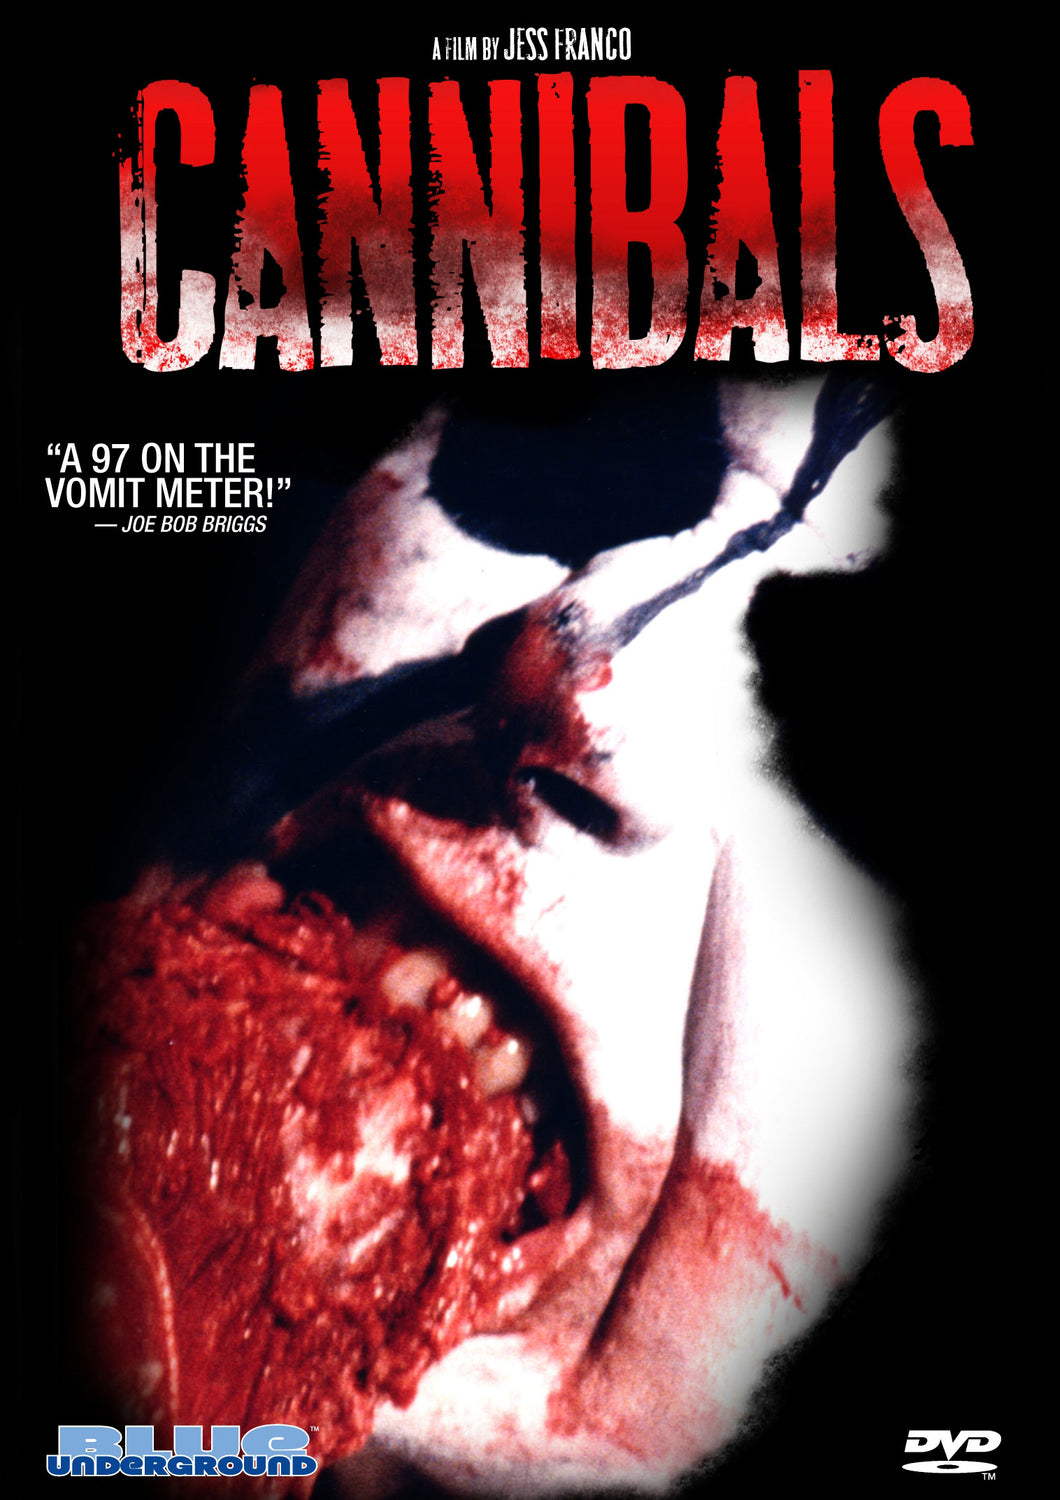 Cannibals (DVD)